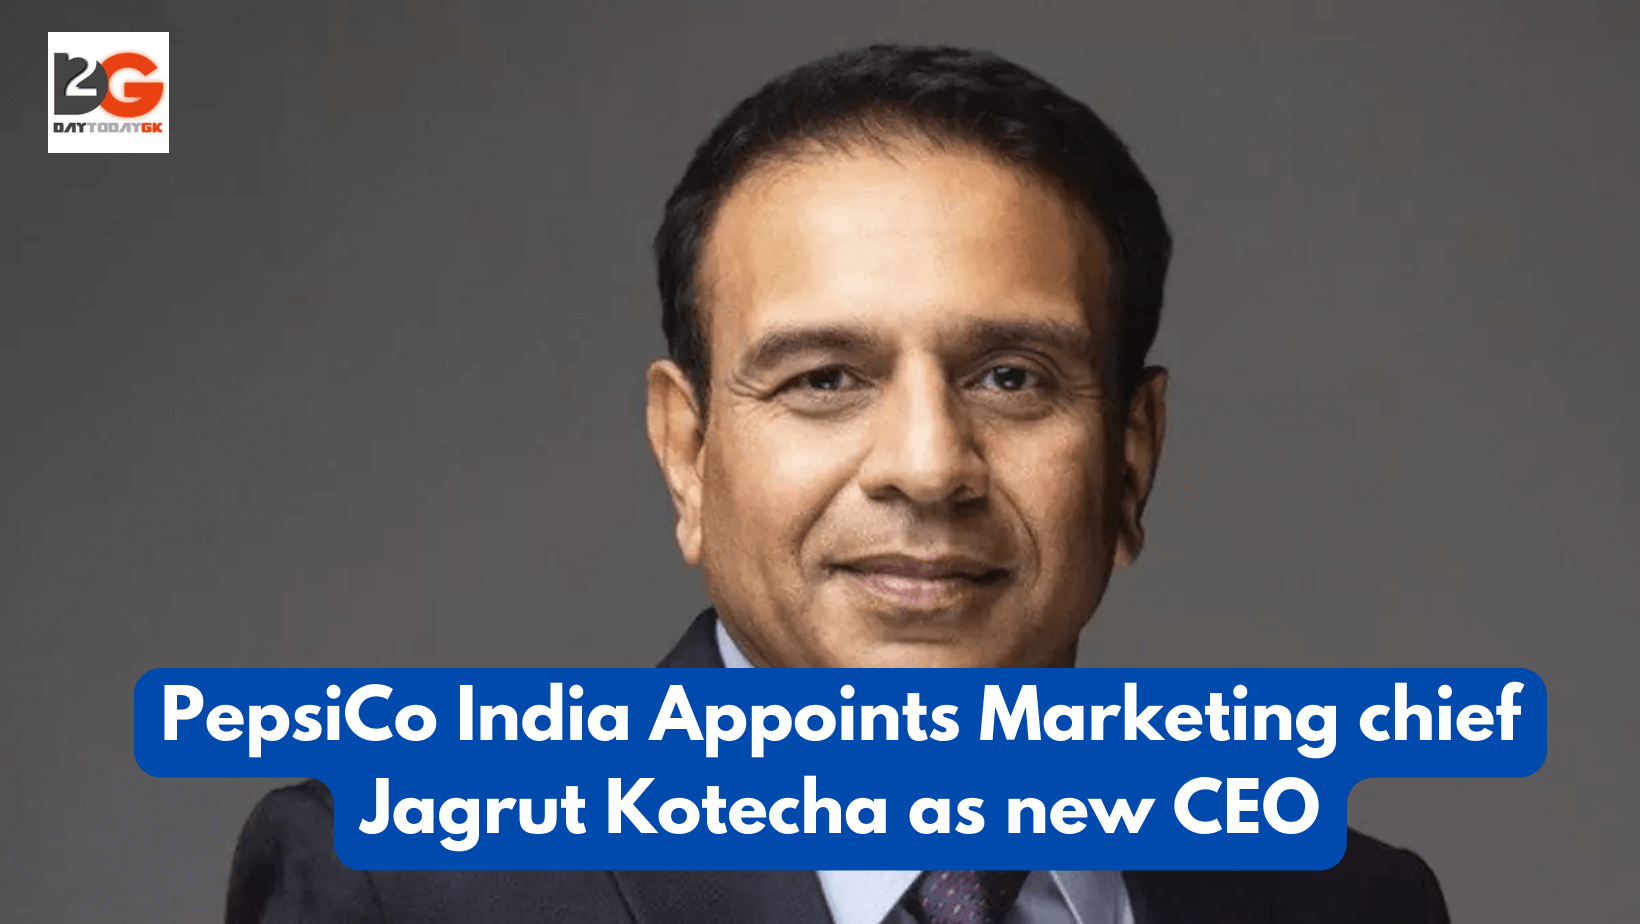 PepsiCo India Appoints Marketing chief Jagrut Kotecha as new CEO